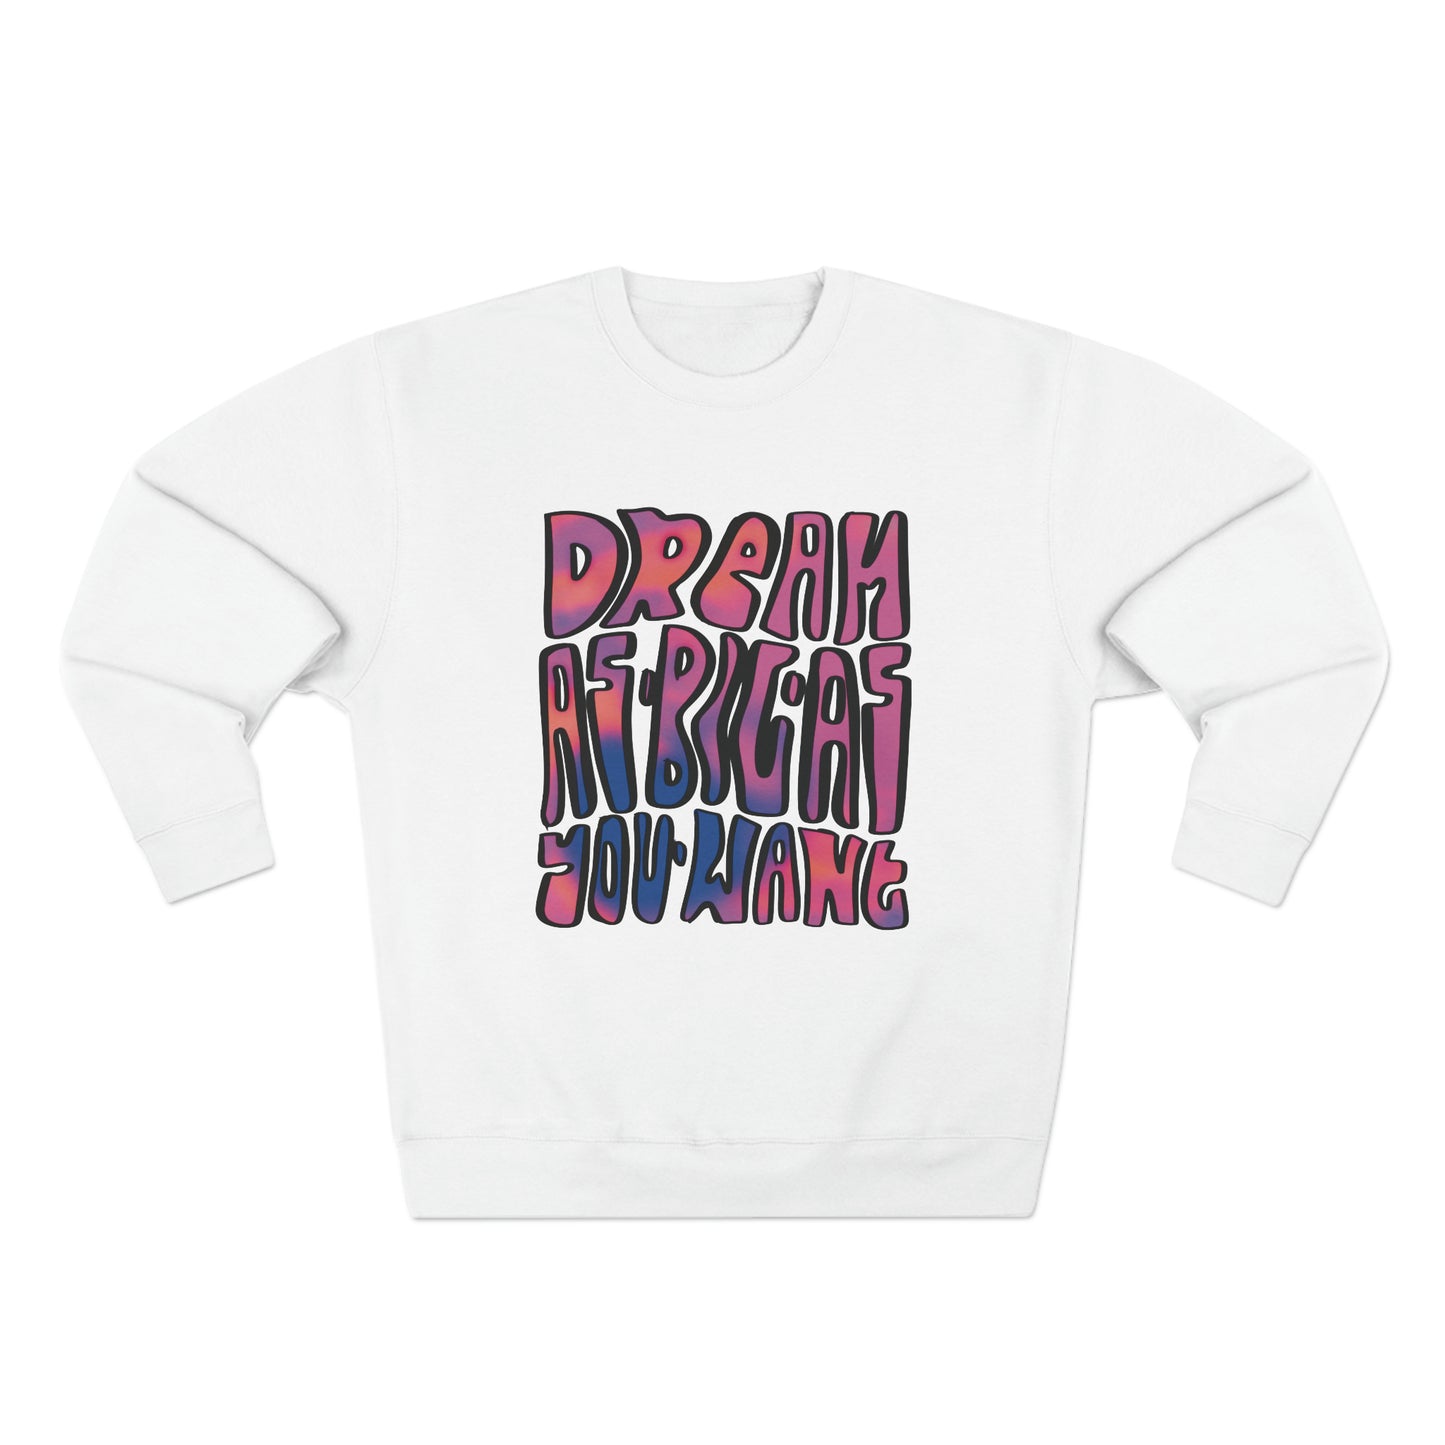 Dream Sweatshirt